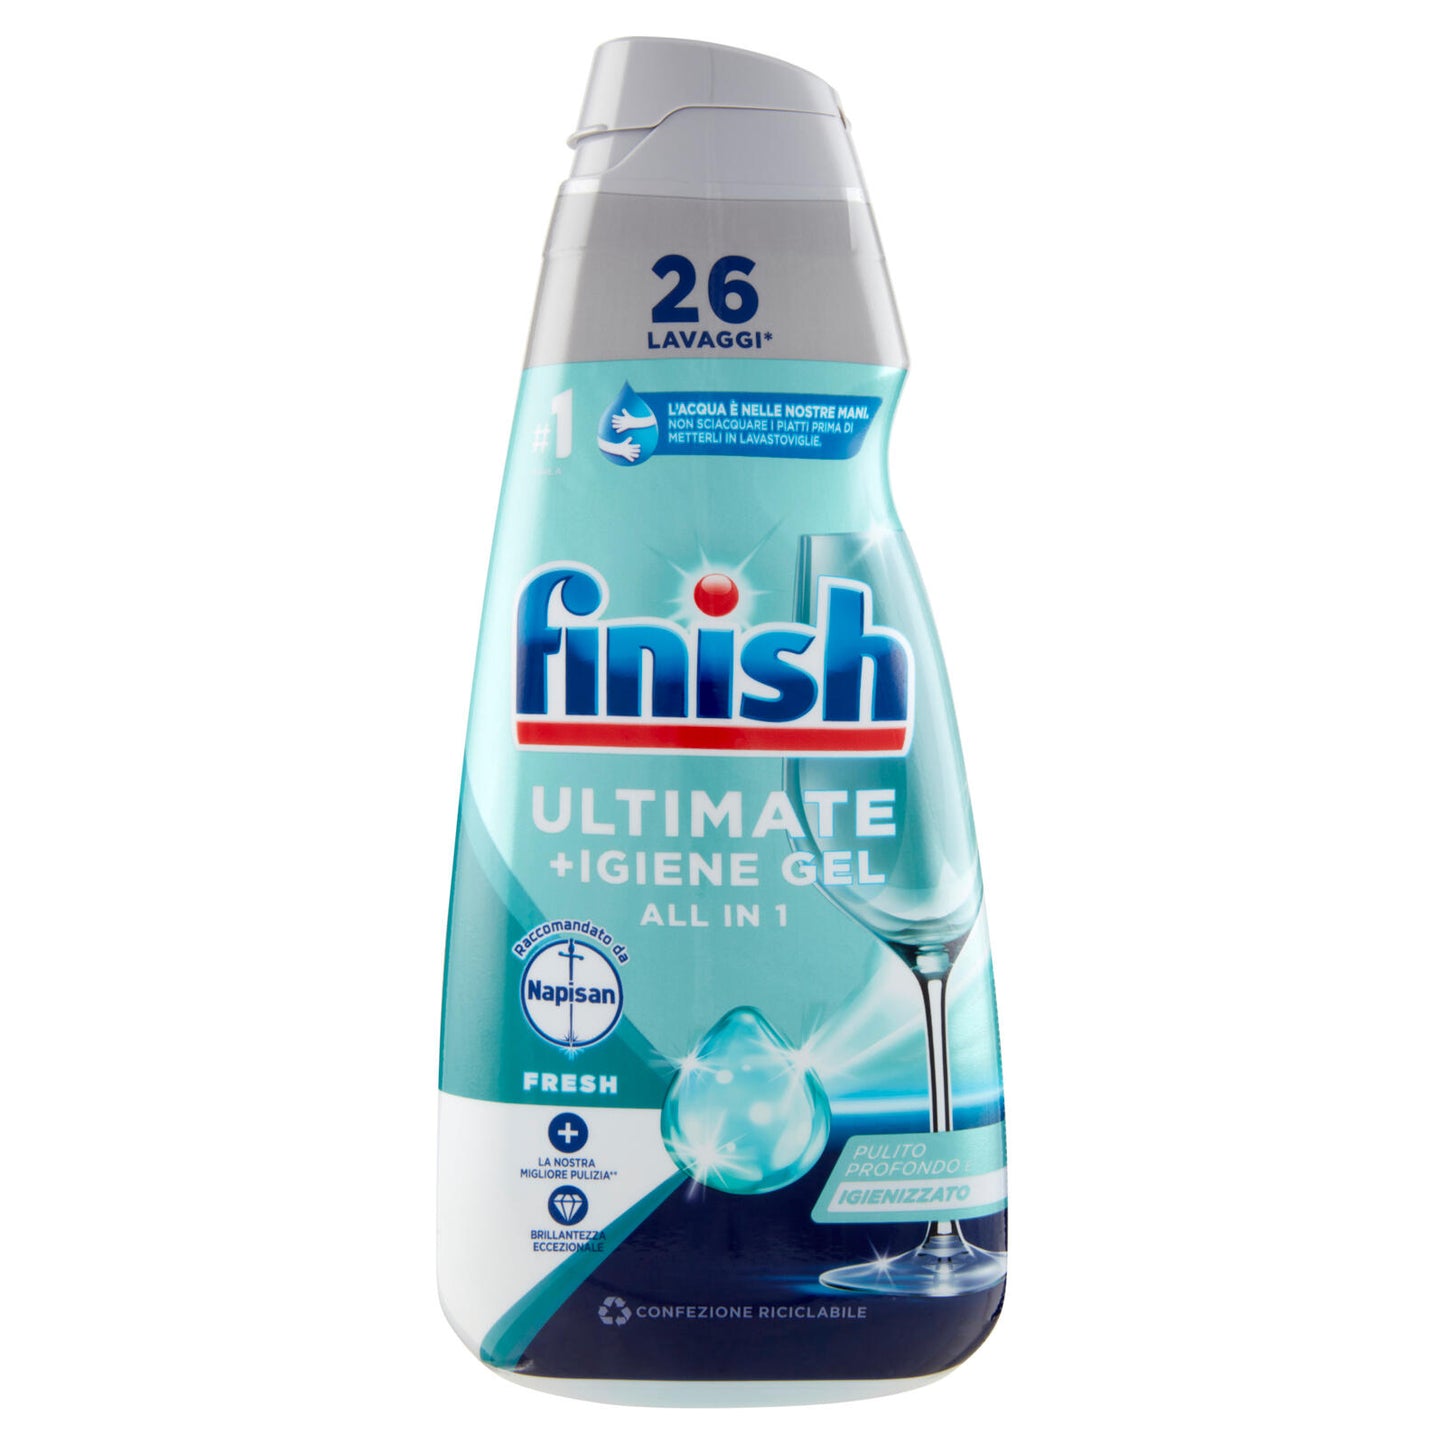 Finish Ultimate + Igiene Gel Napisan Regular liquido lavastoviglie 26  lavaggi 560 ml ->